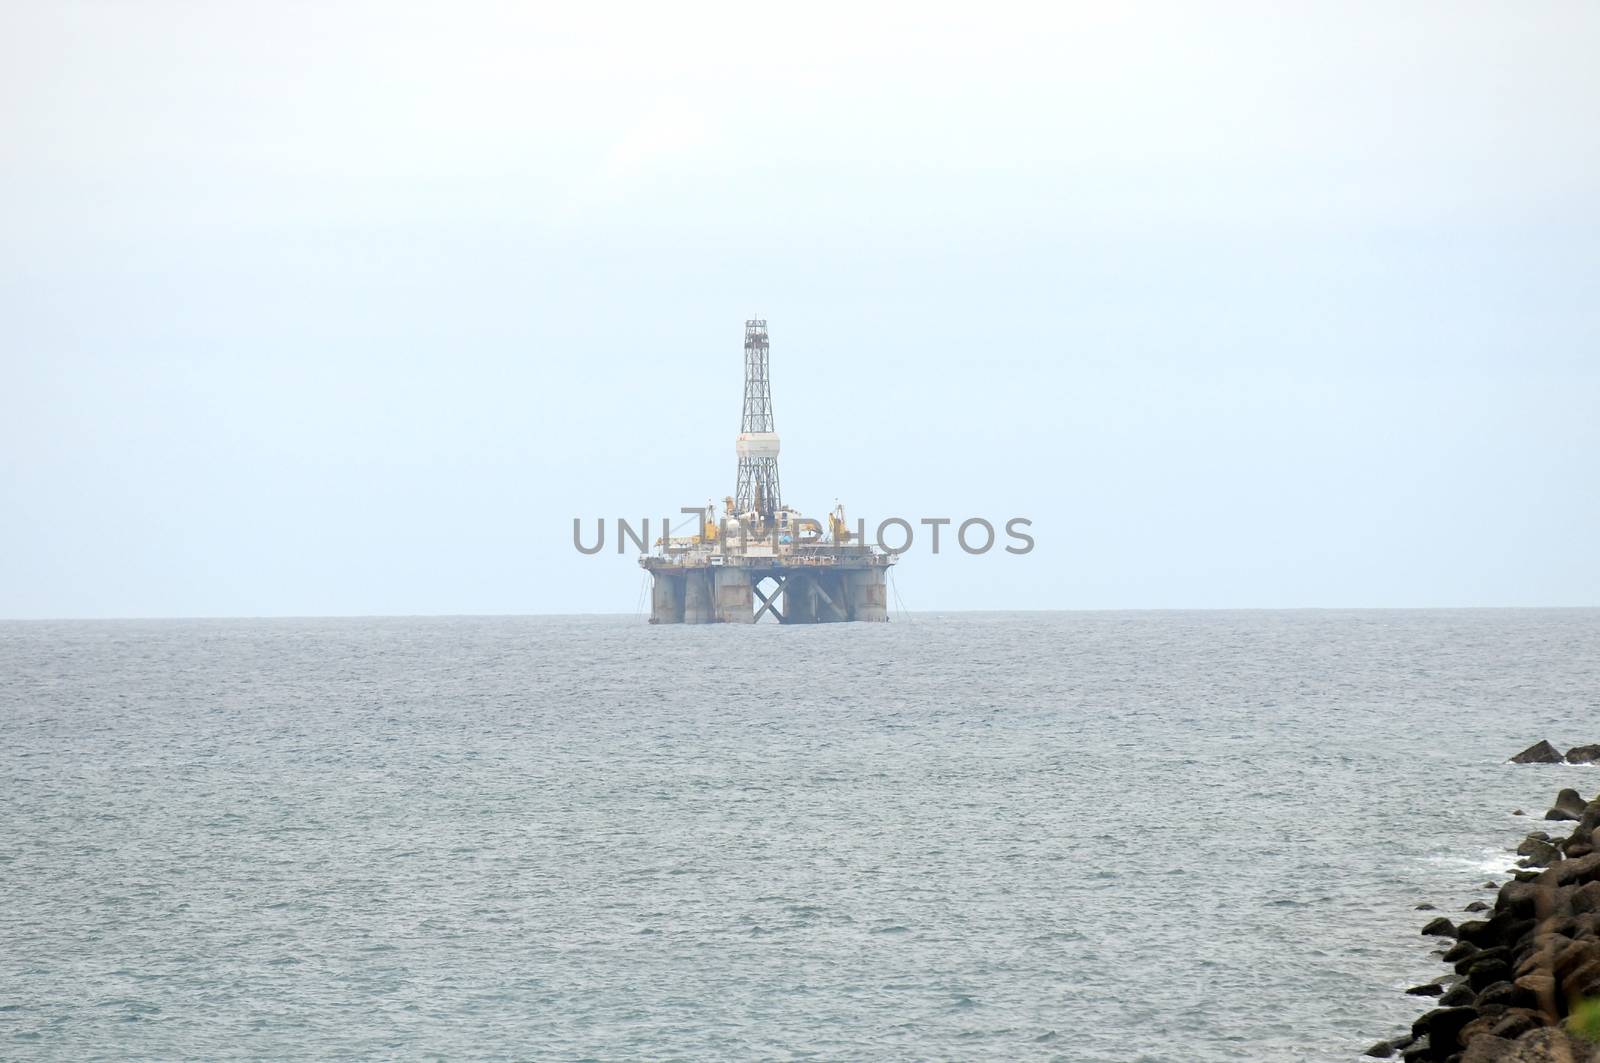 One Oil Platform in the Atlantic Ocean, in Canary Islands, Spain